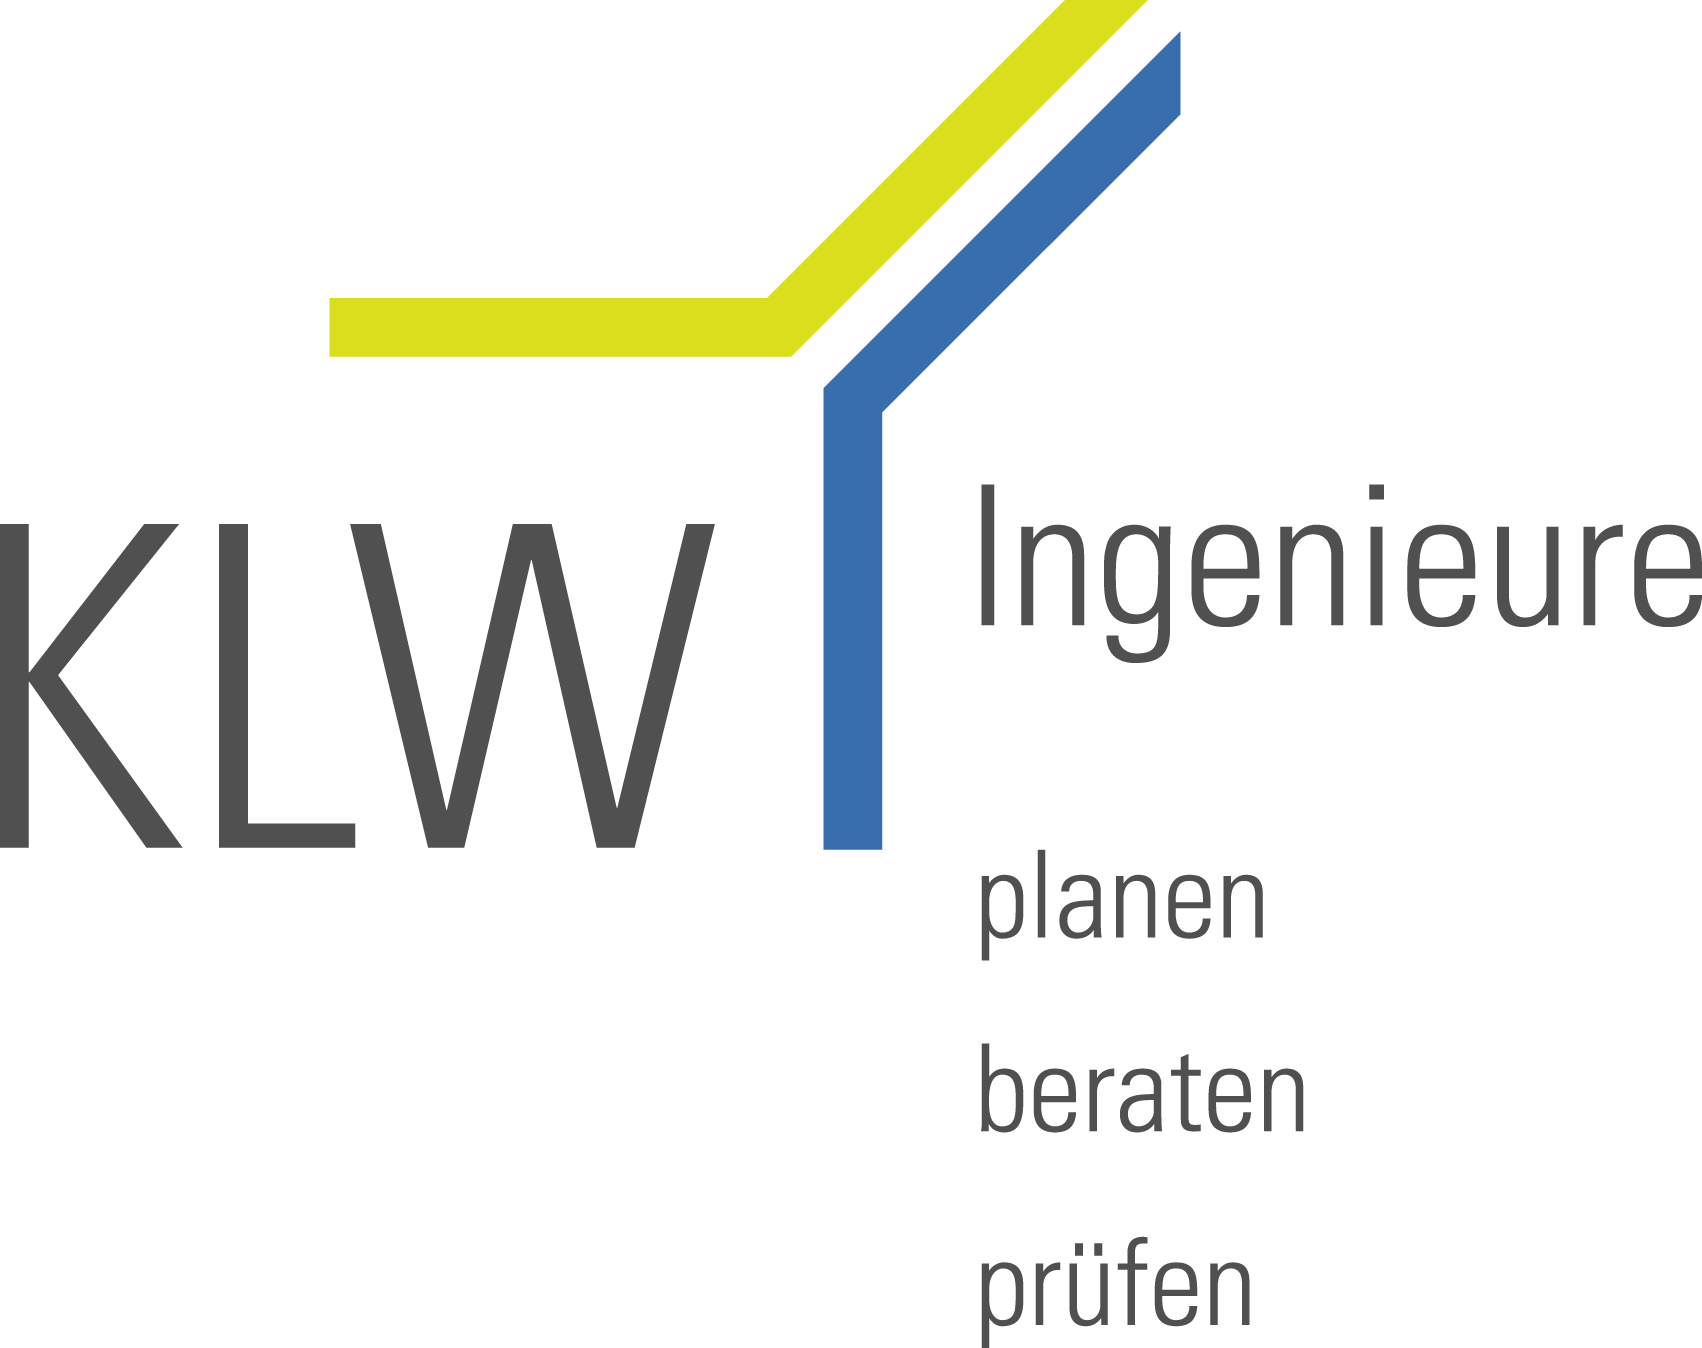 KLW Ingenieure GmbH